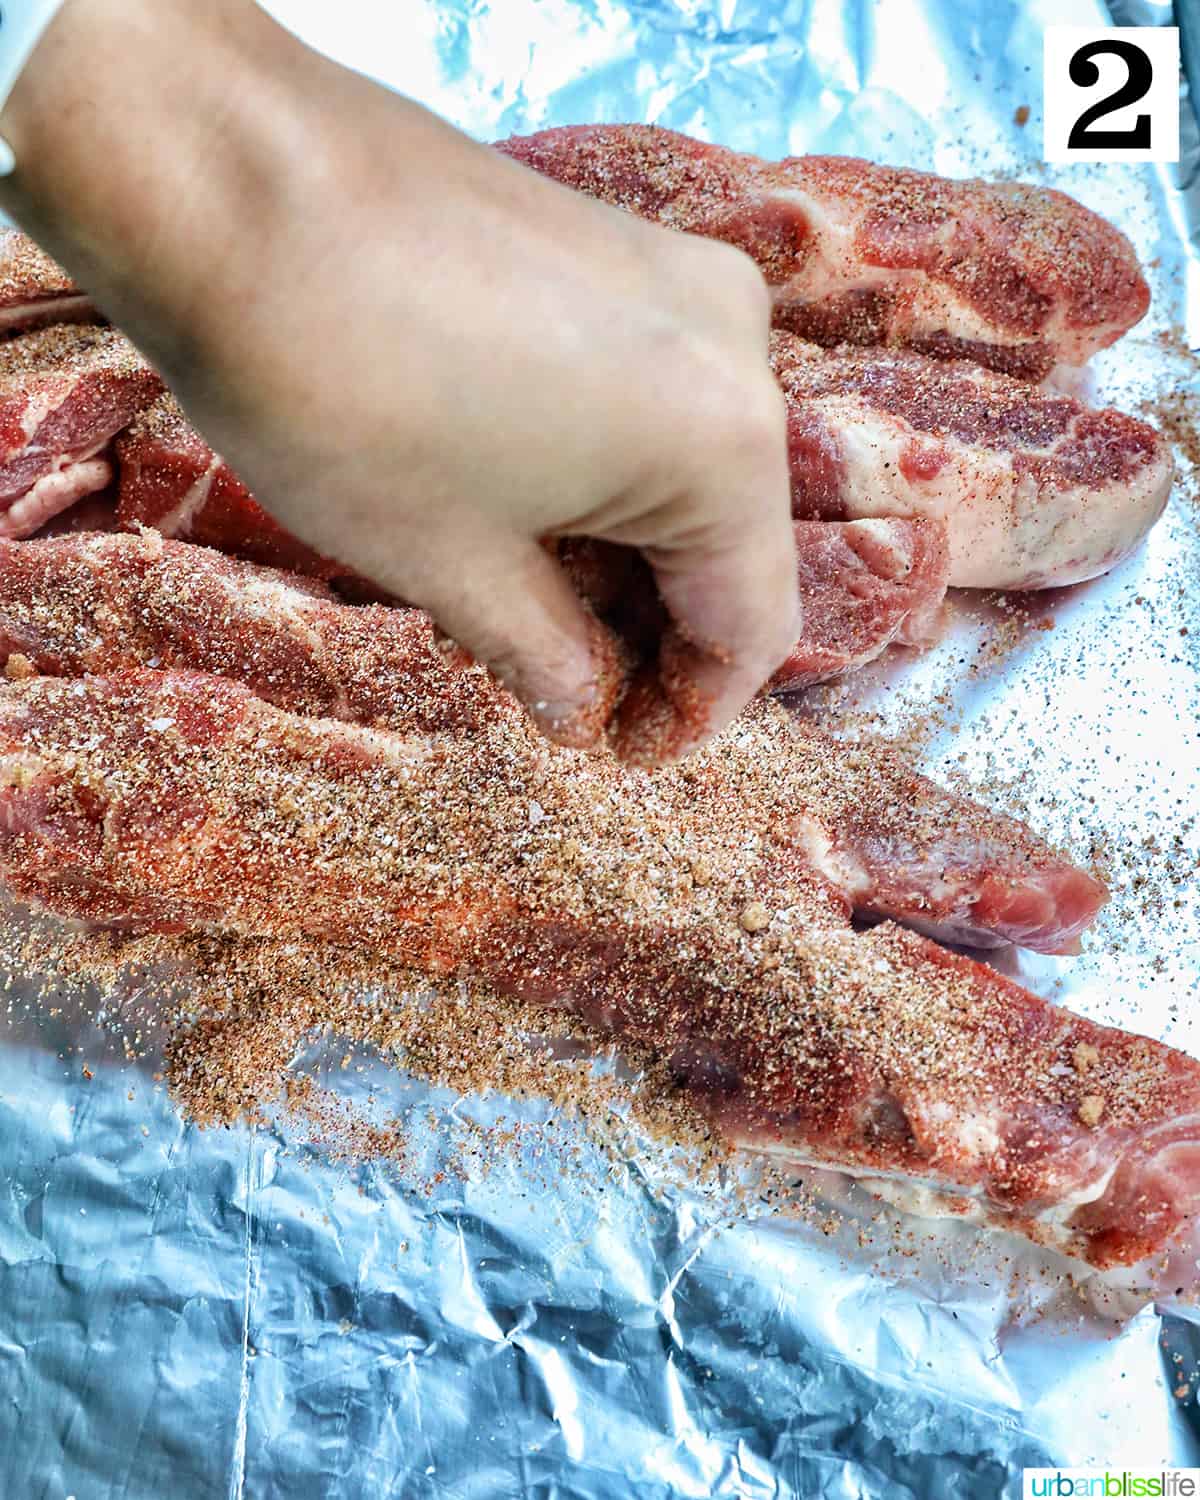 hand seasoning ribs on aluminum foil.